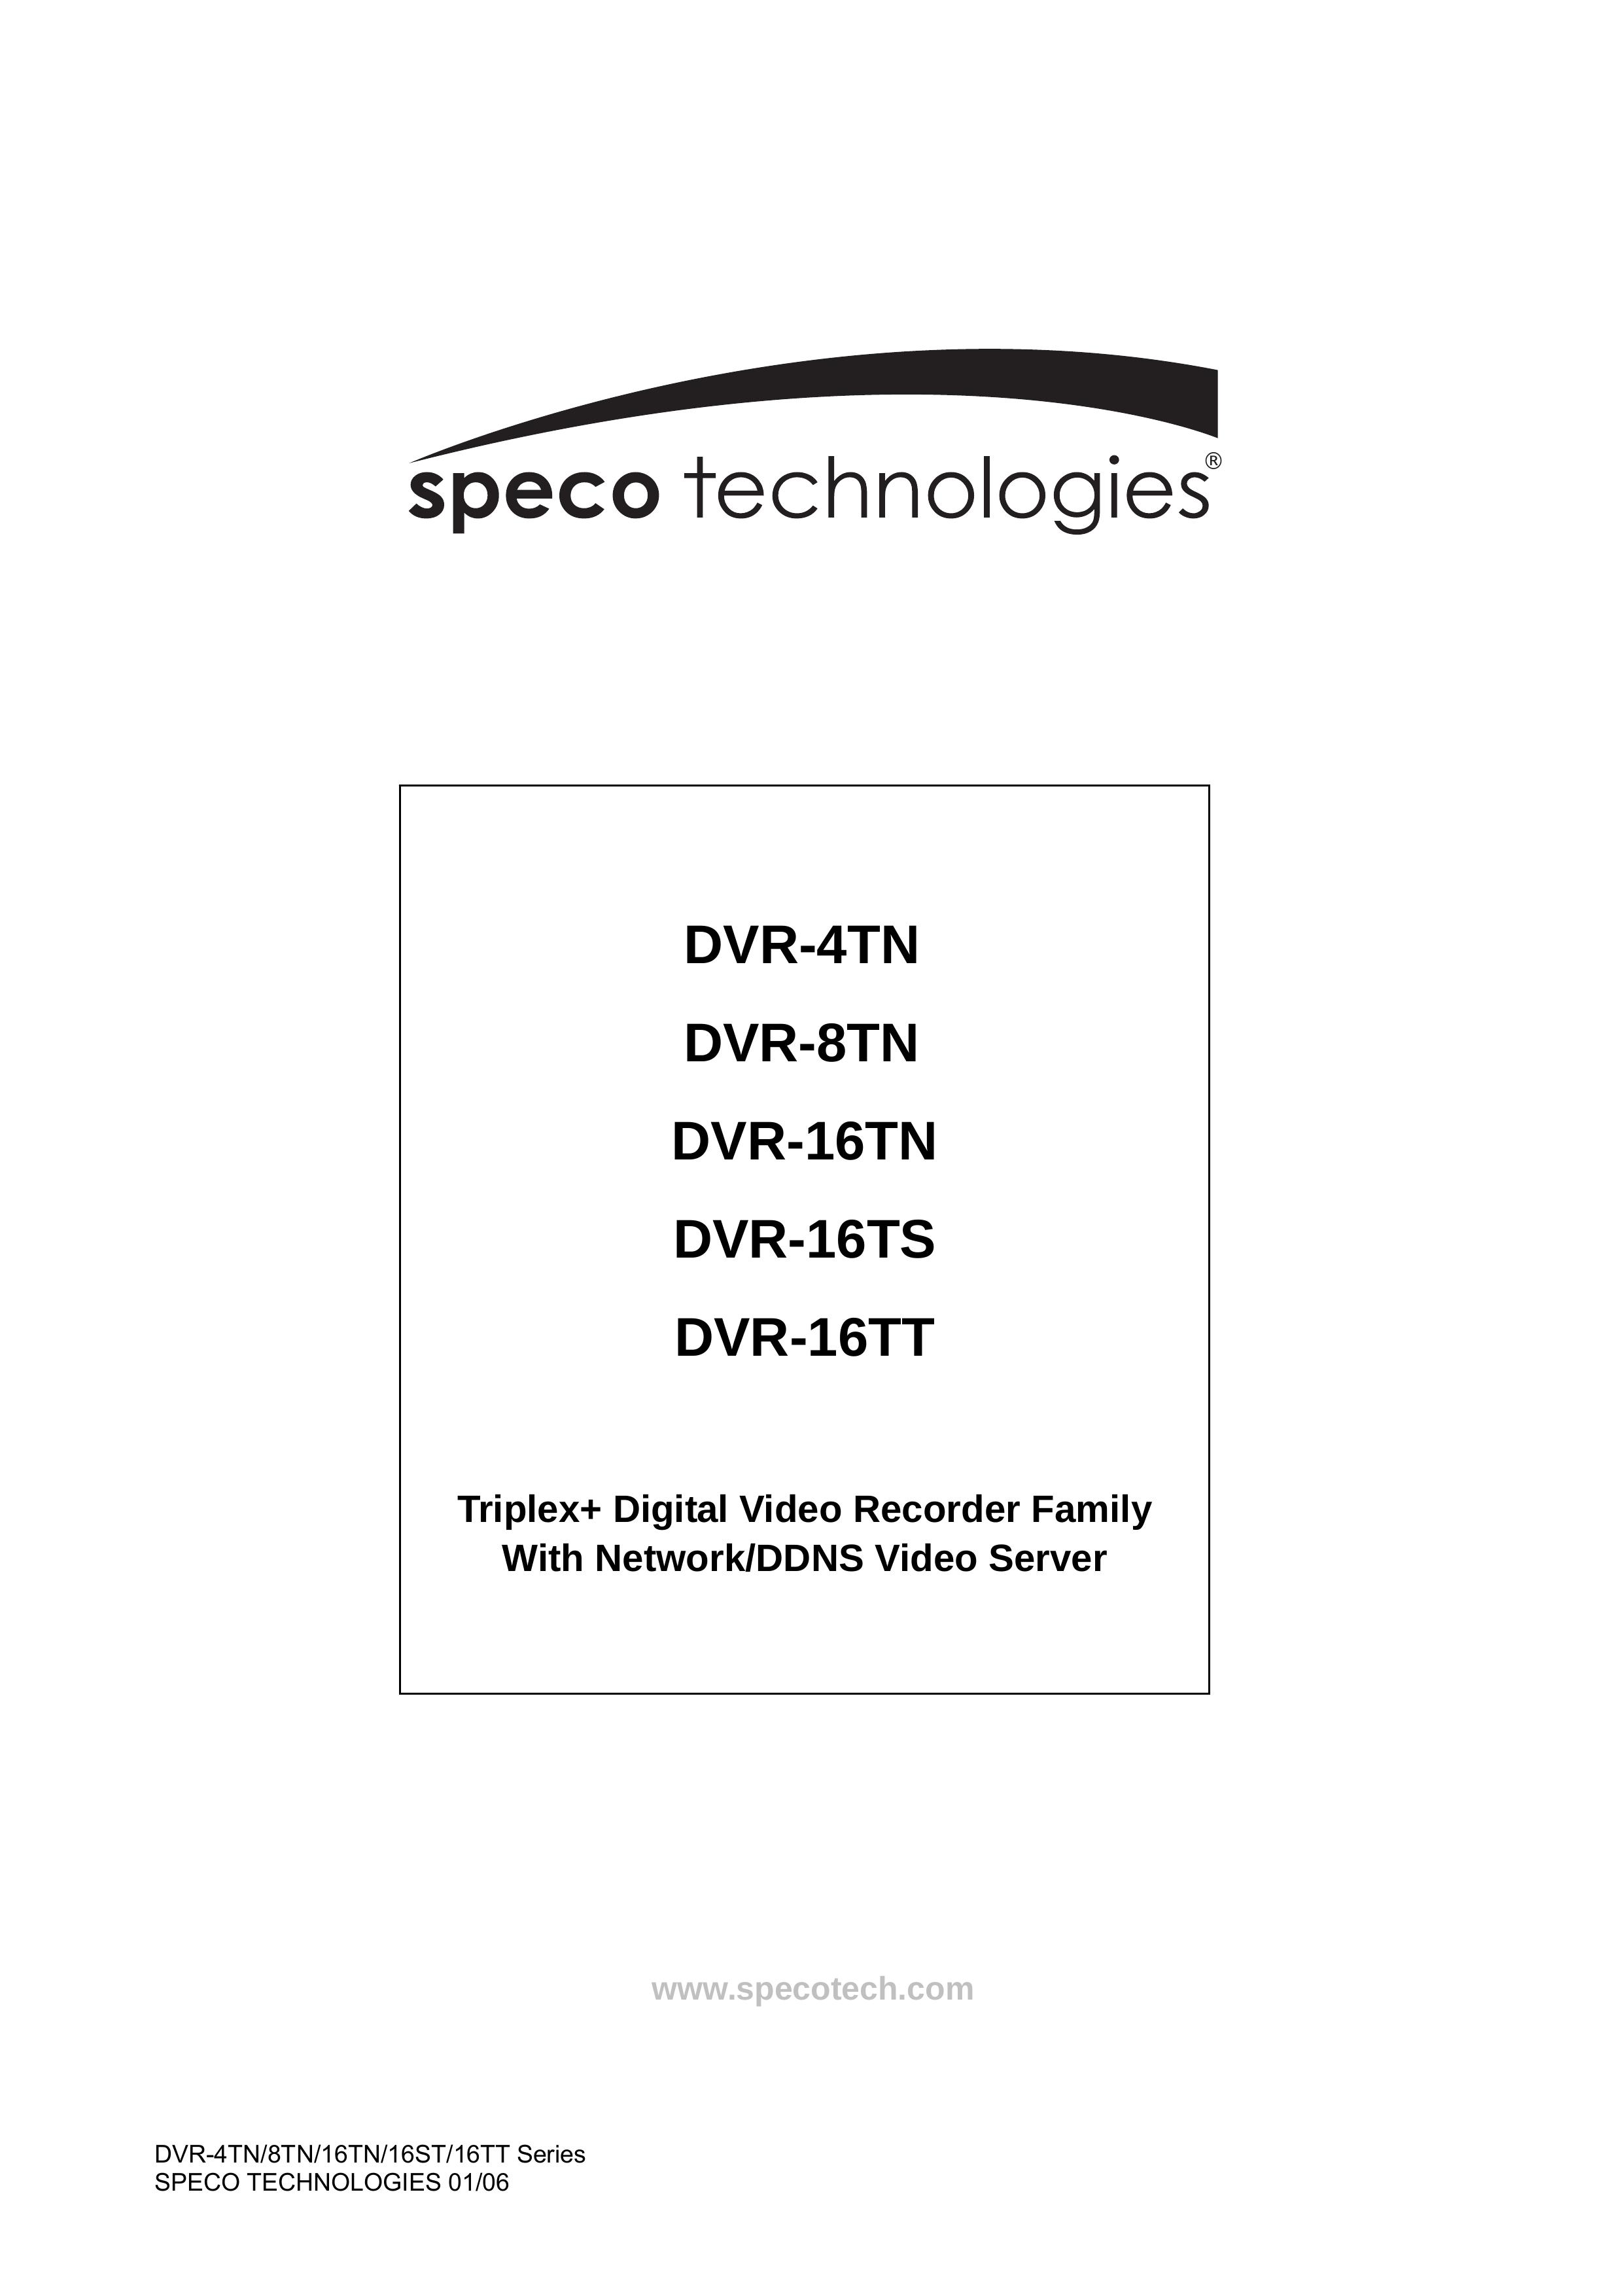 Speco Technologies DVR-16TS Camcorder User Manual